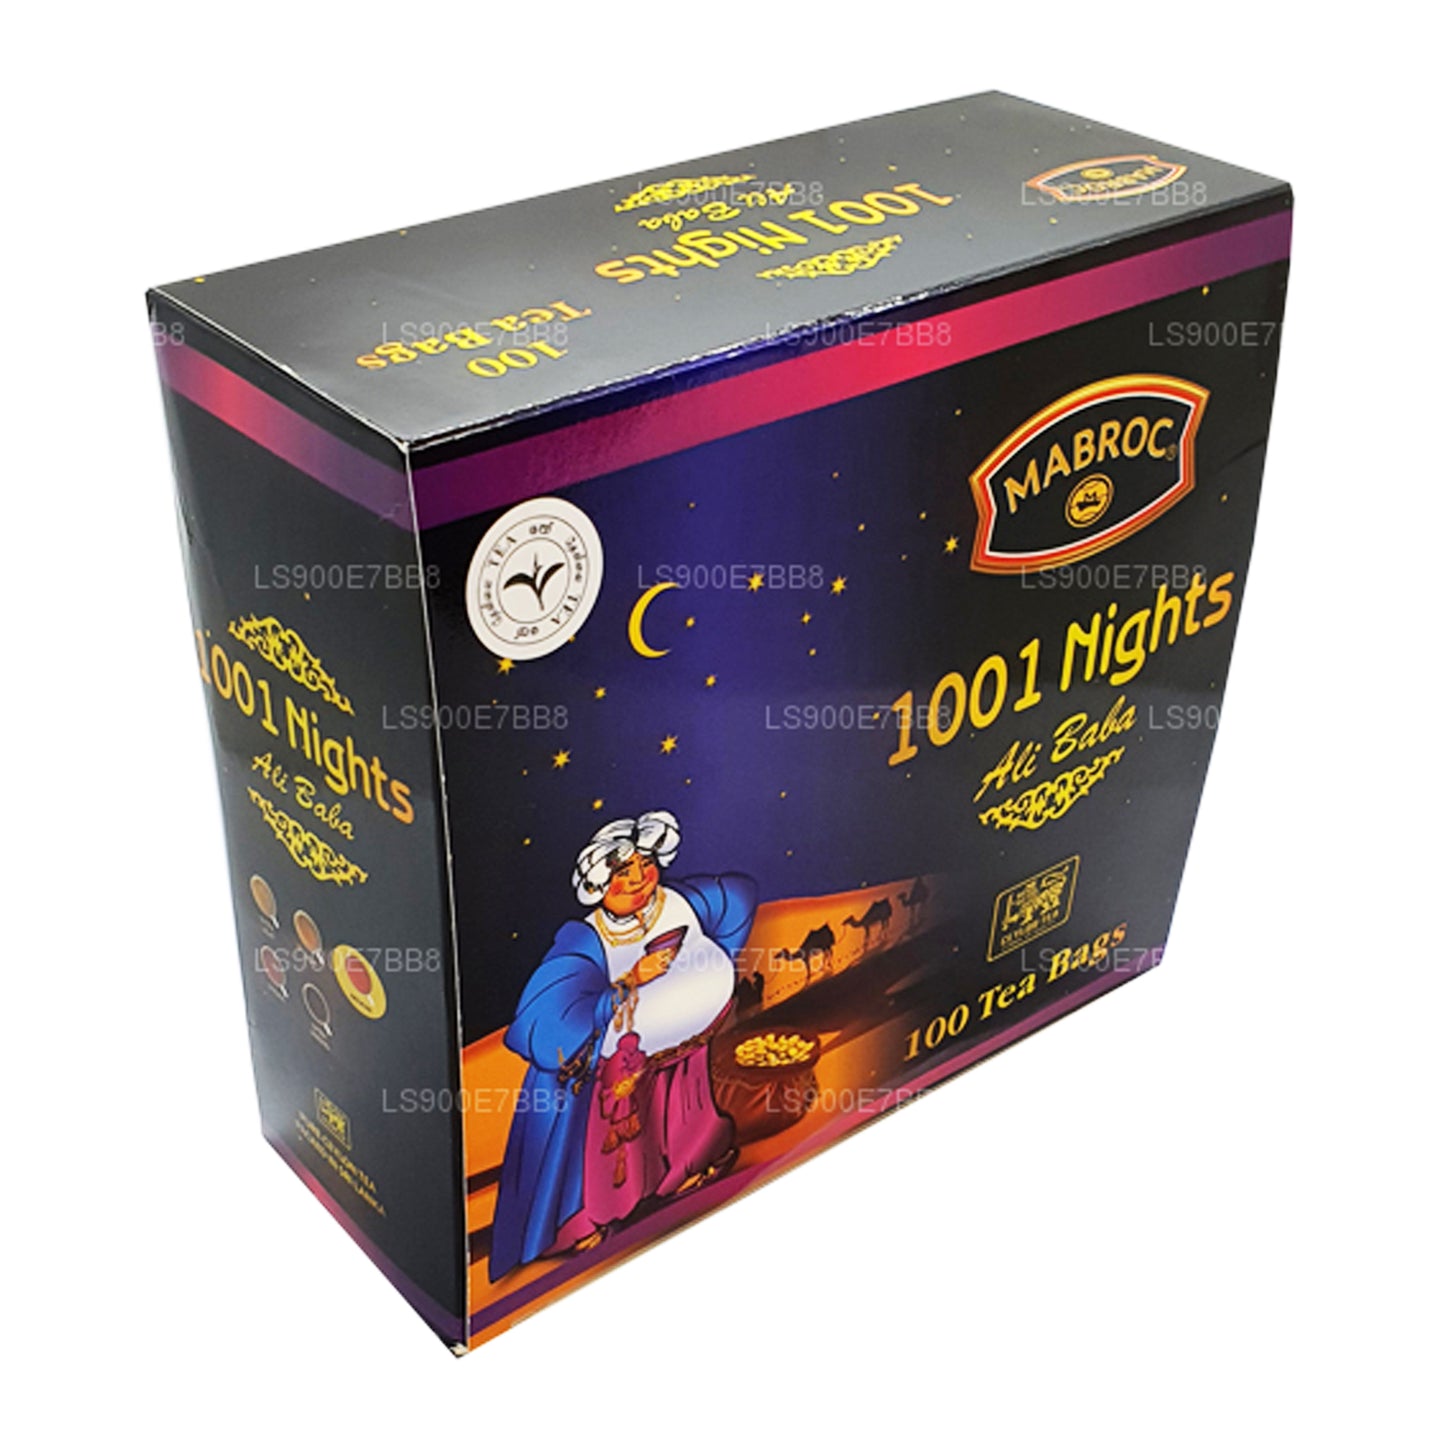 Mabroc Night of 1001 Stars Ali Baba (200 g) 100 bolsitas de té